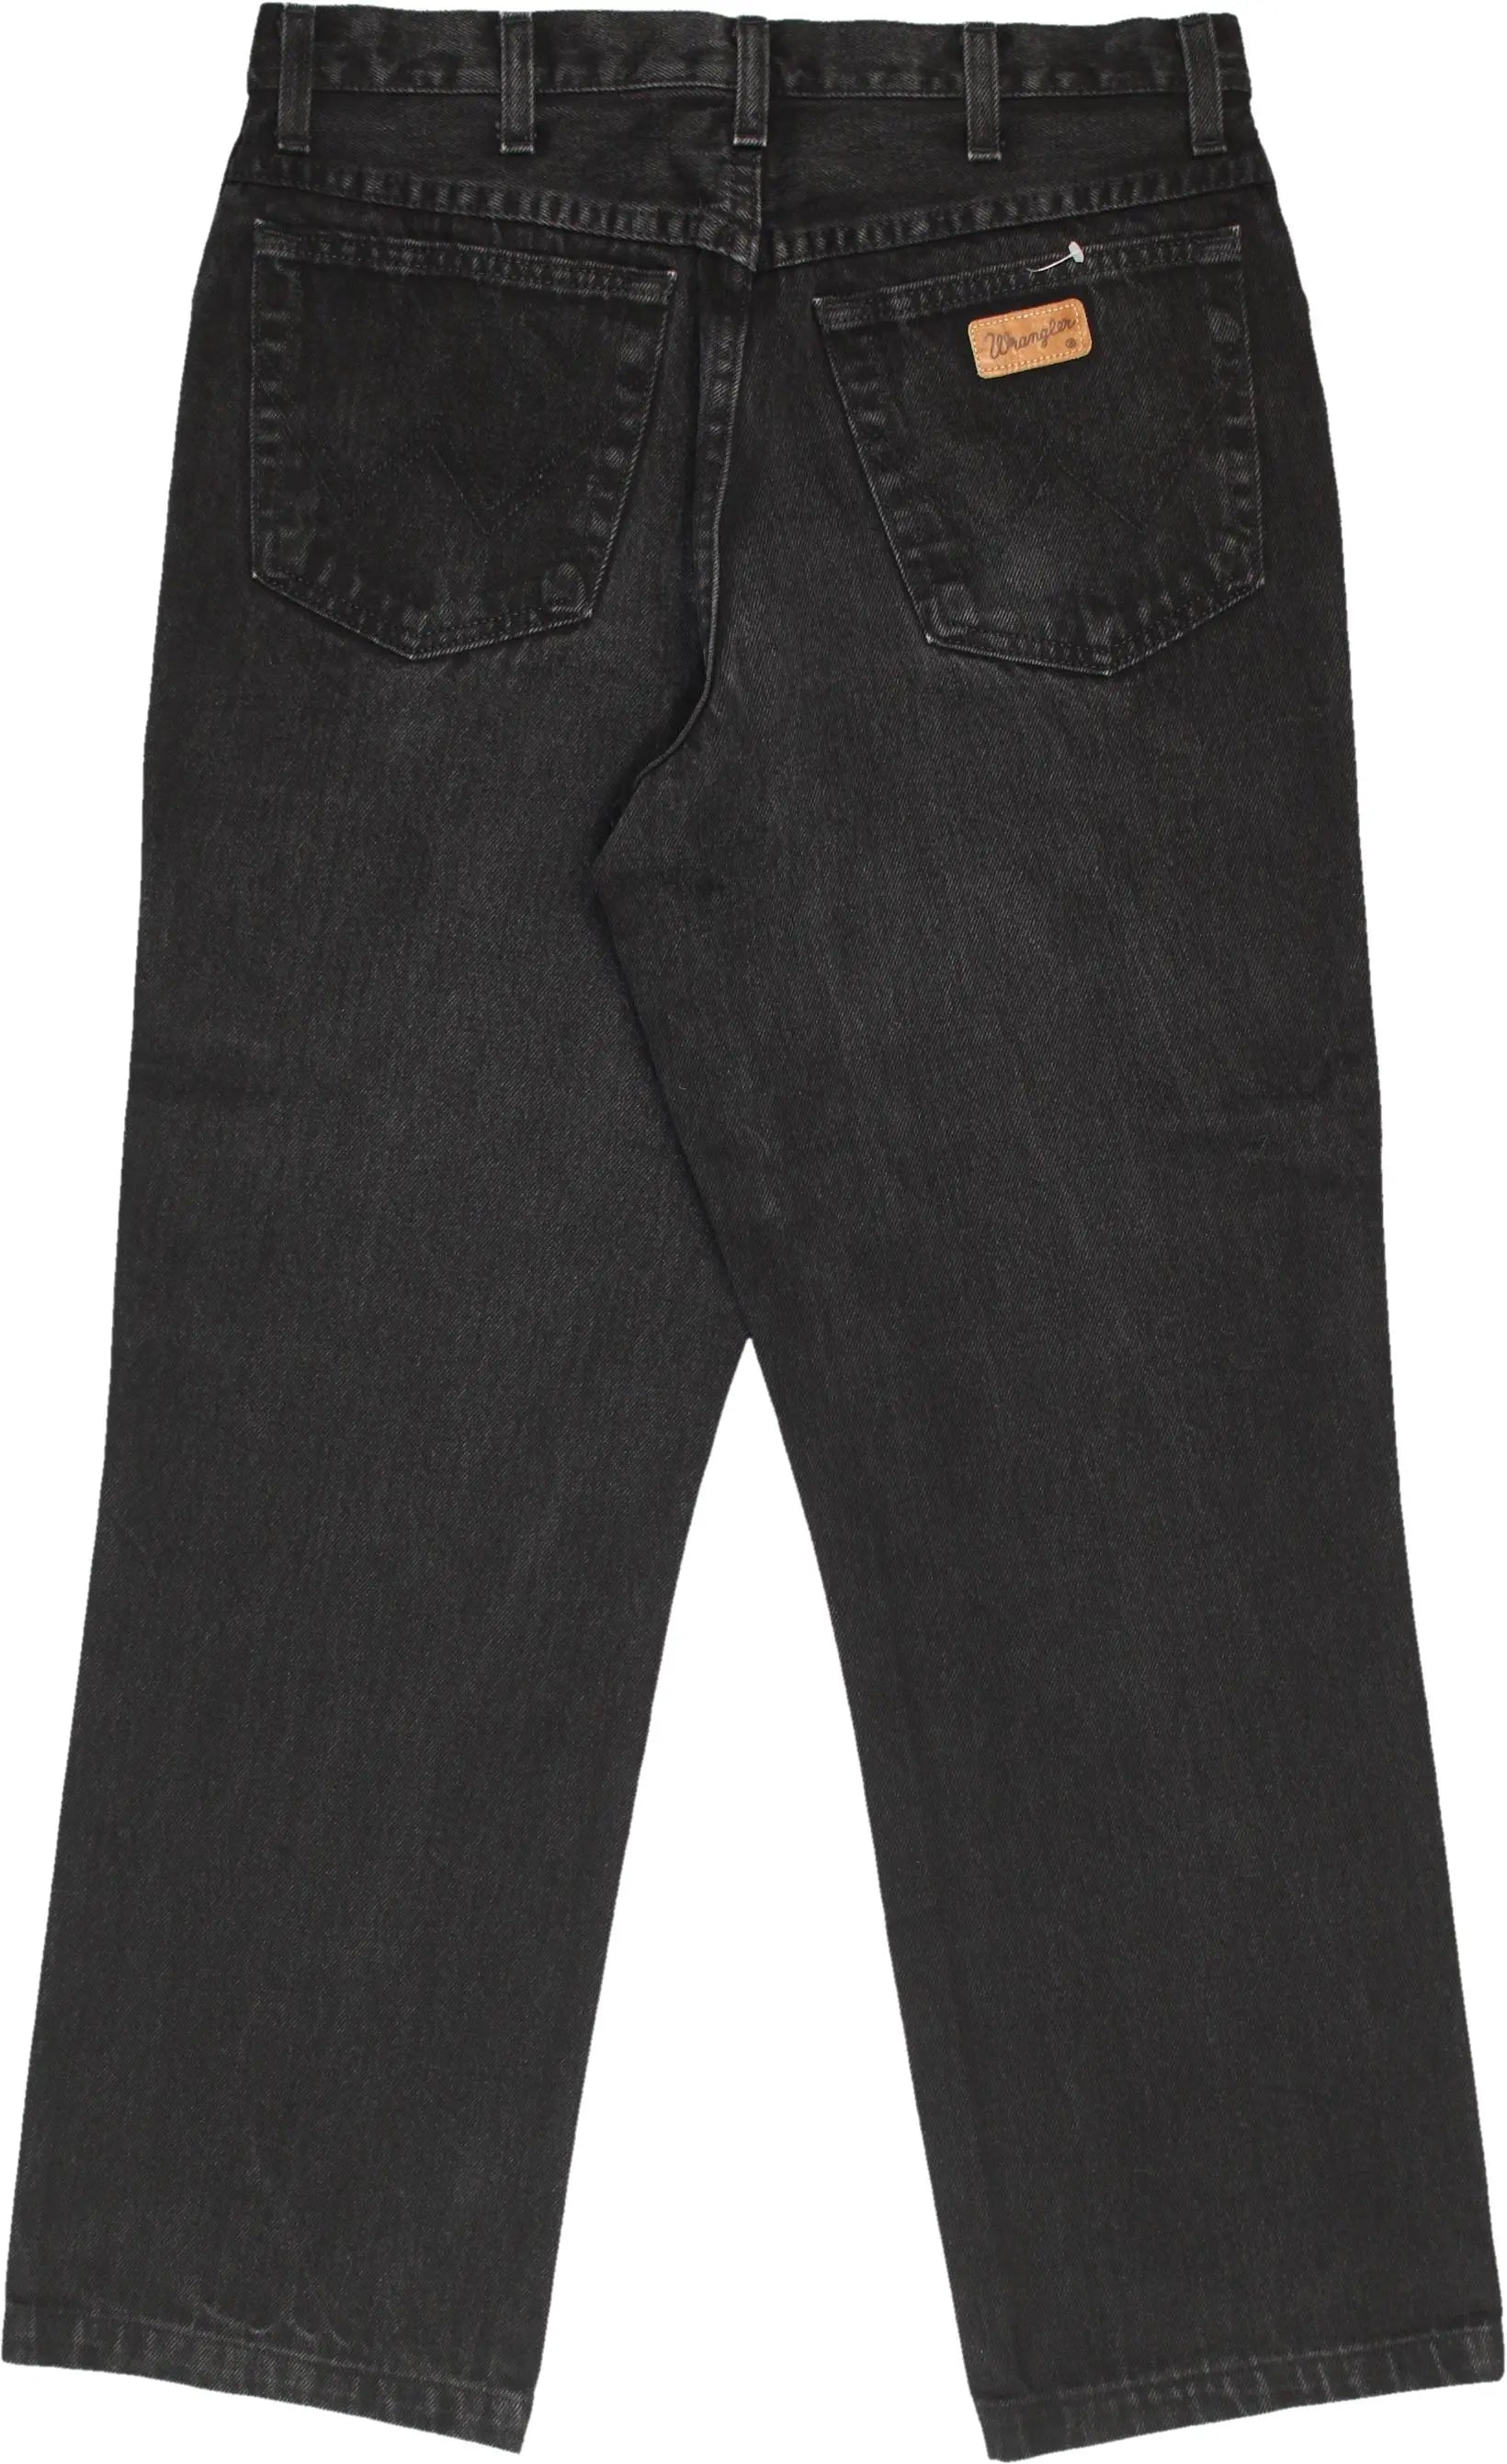 Wrangler - Wrangler Comfort Jeans- ThriftTale.com - Vintage and second handclothing